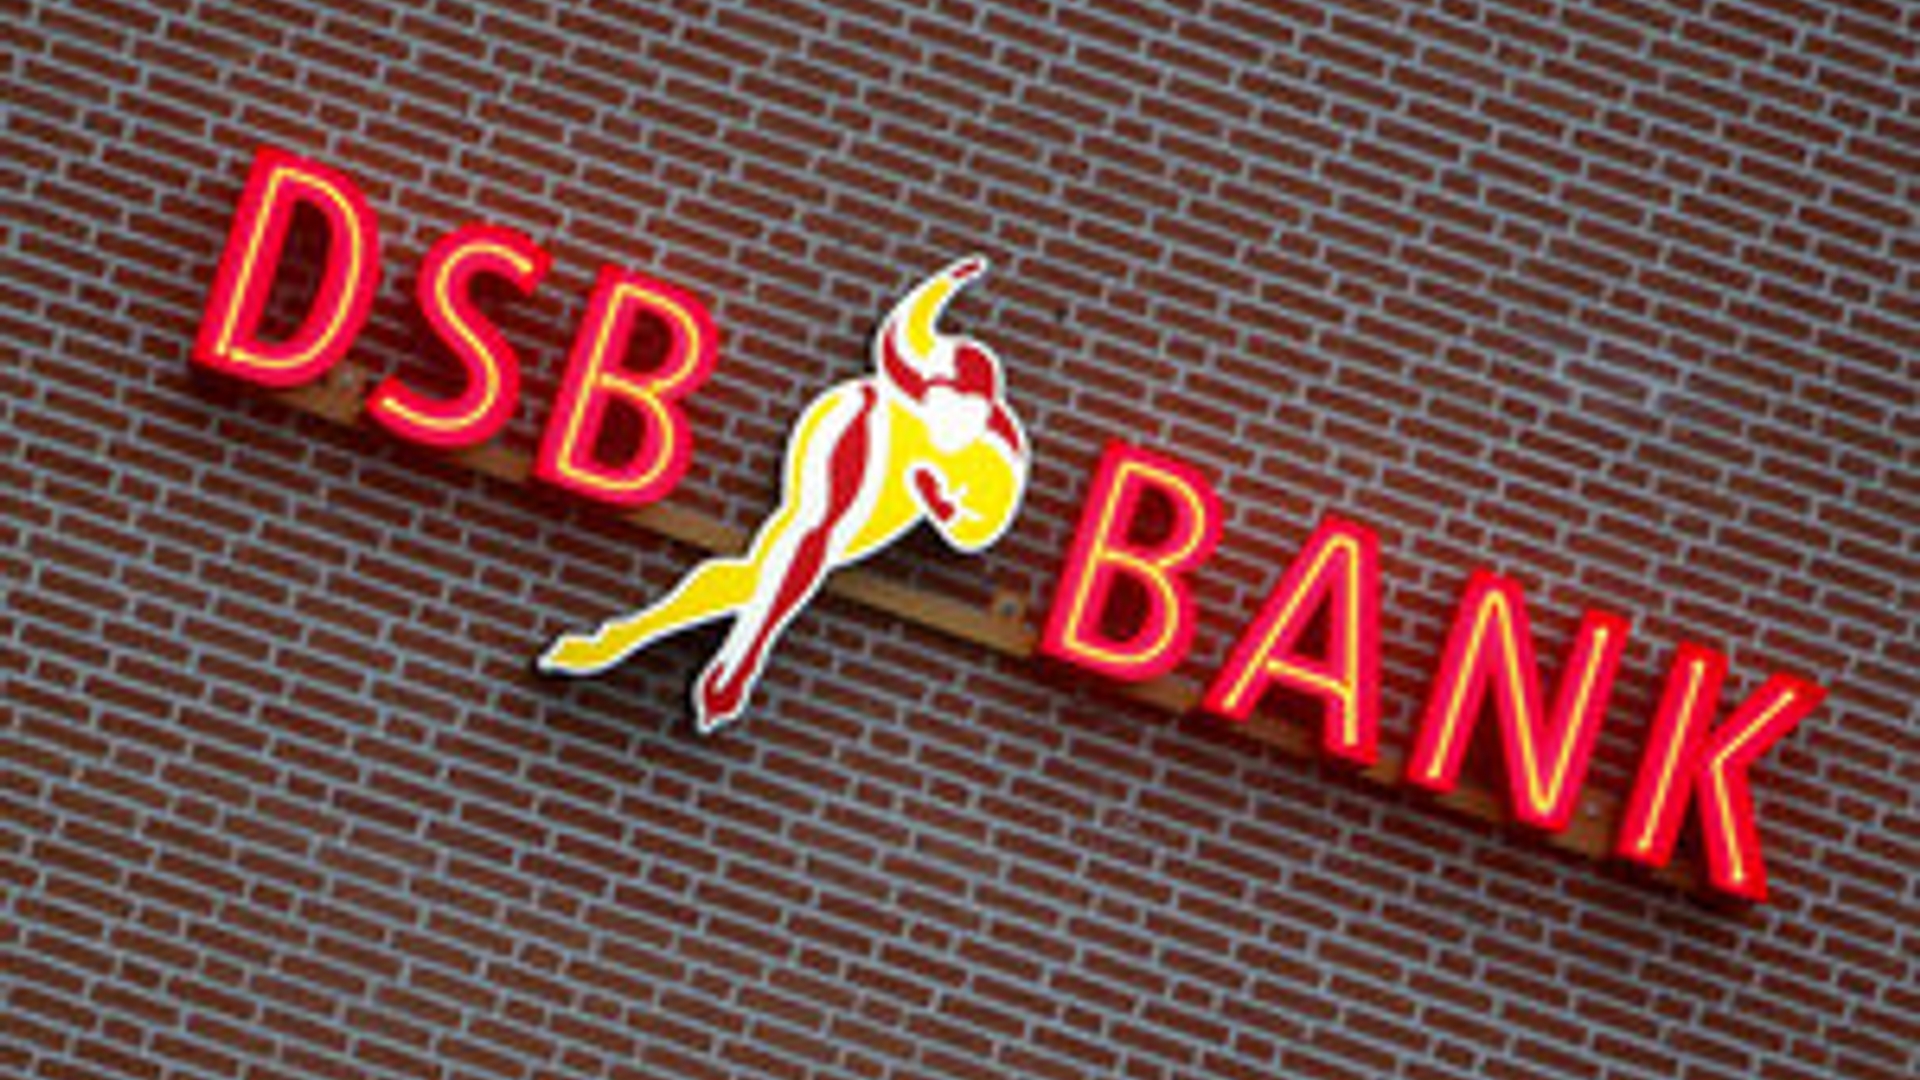 dsb-bank-logo.jpg